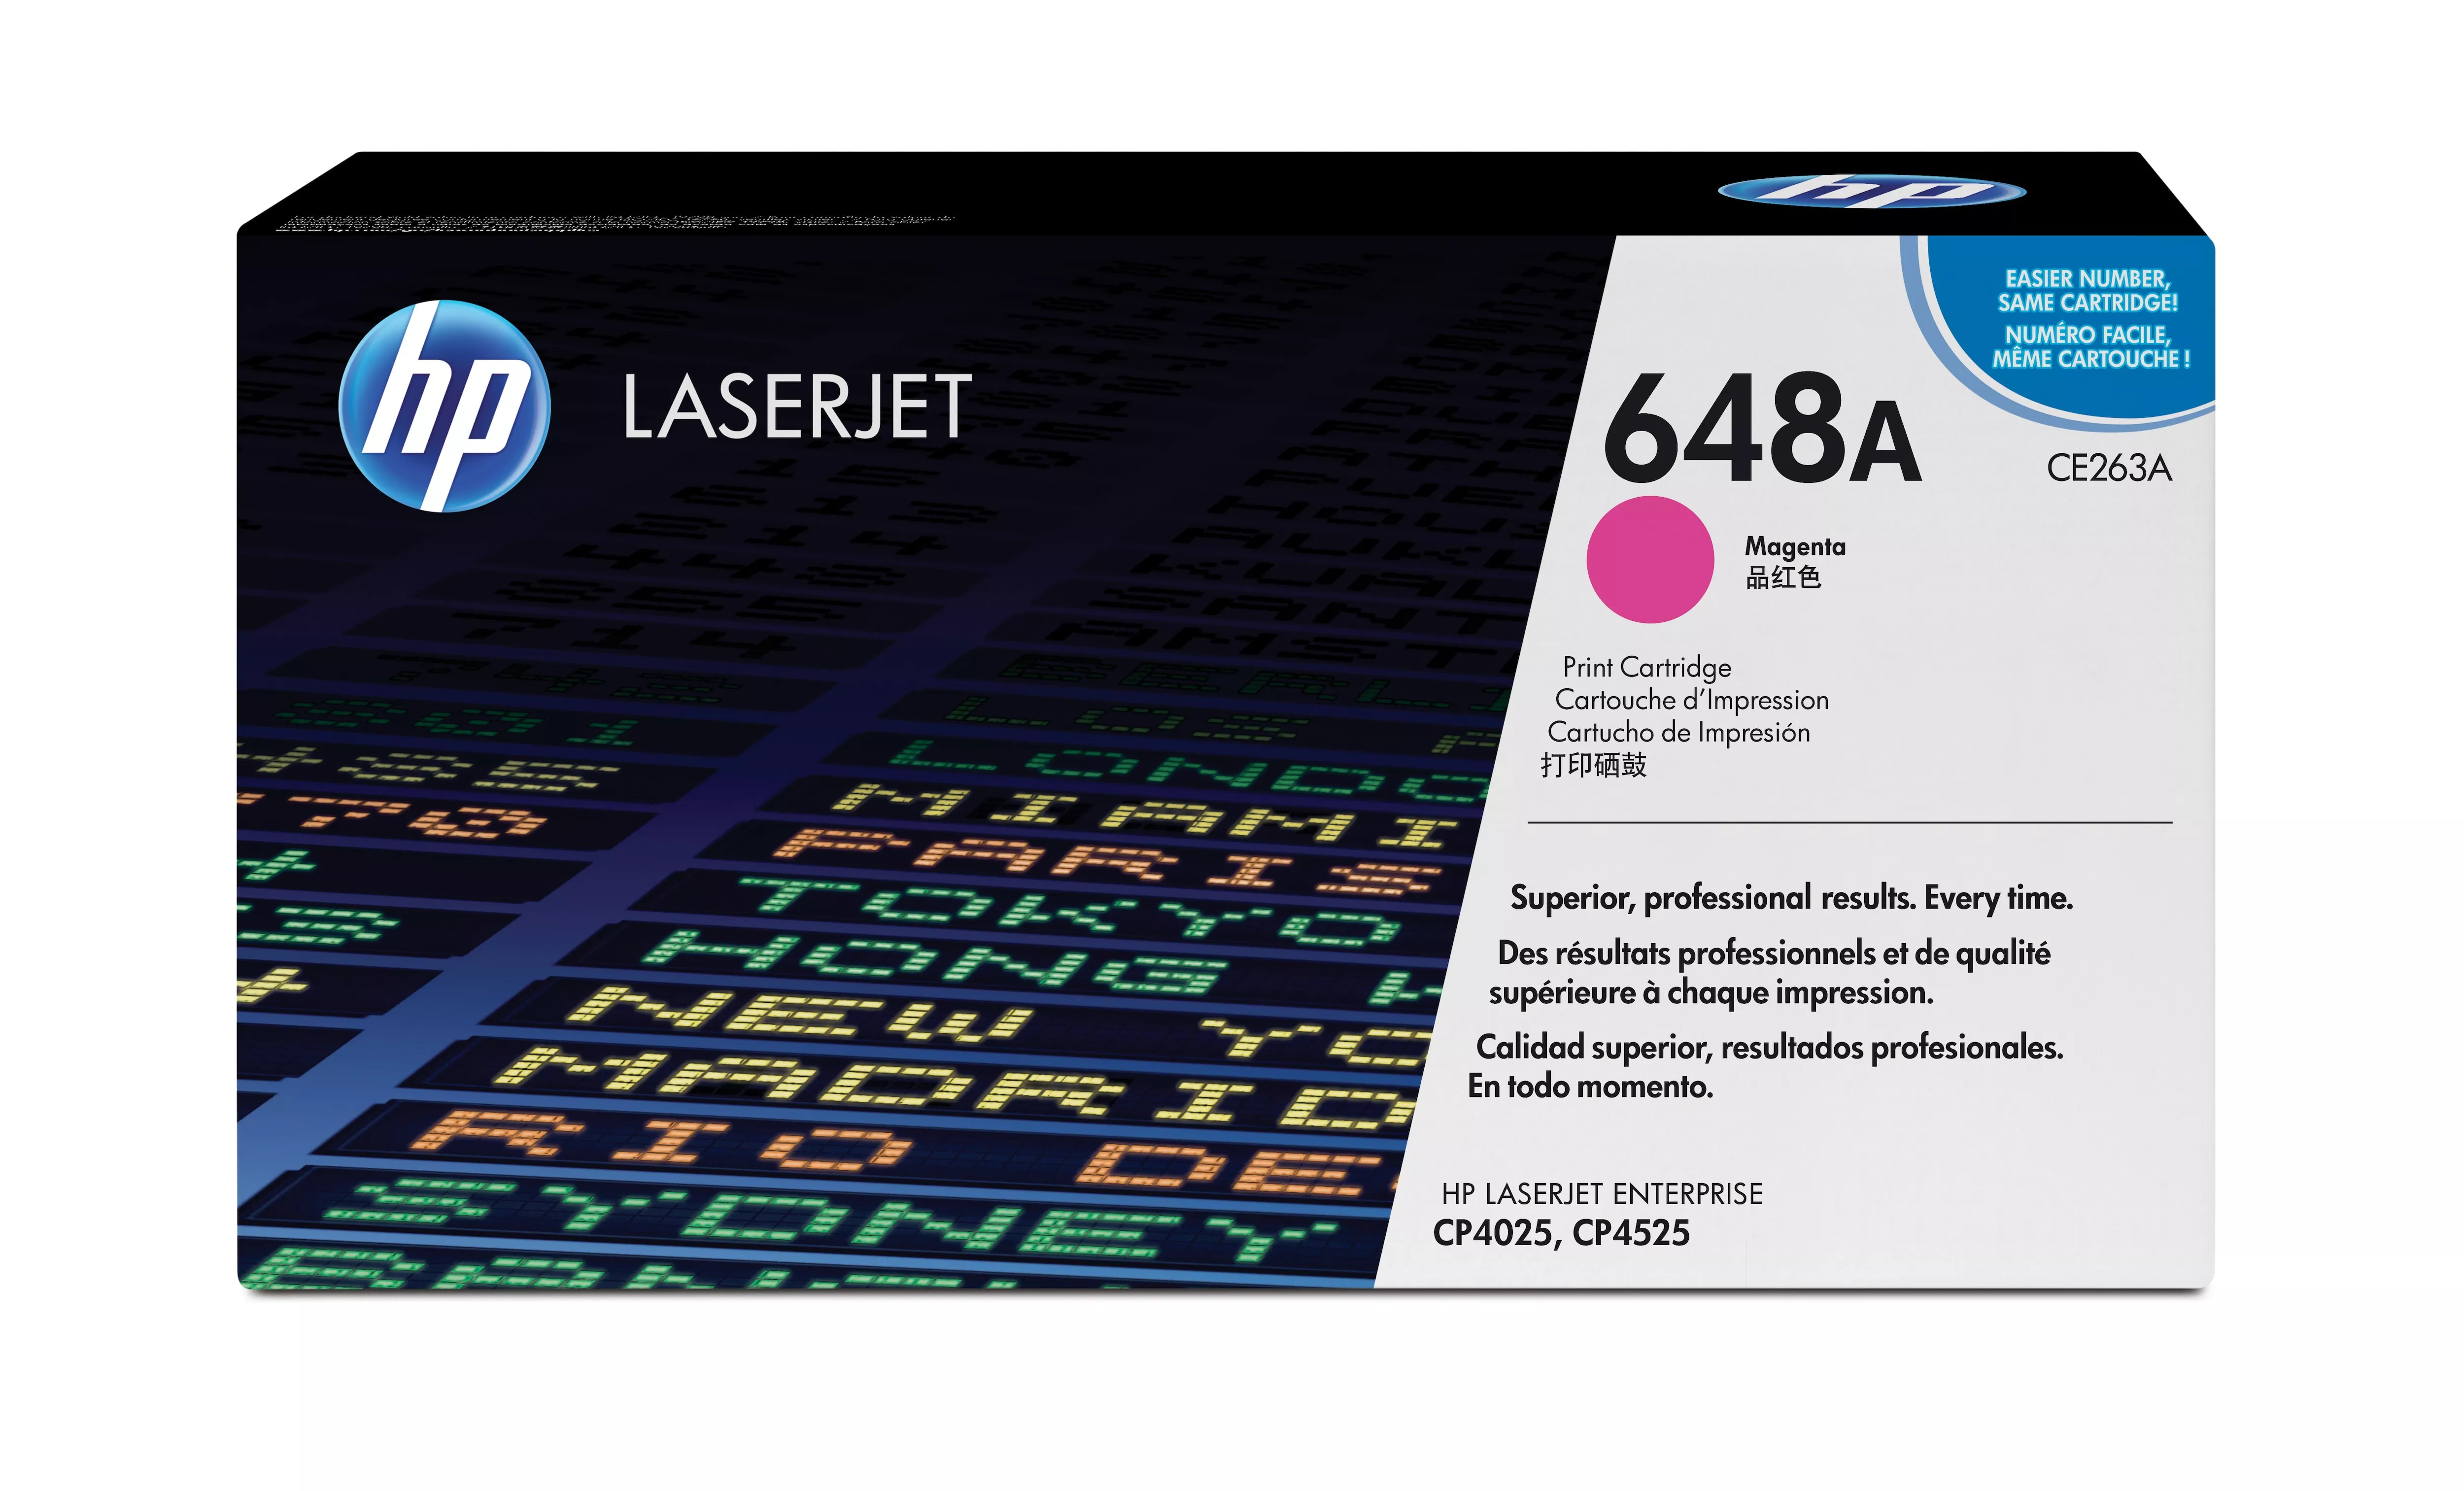 Vente HP 648A original Color LaserJet Toner cartridge CE263A au meilleur prix